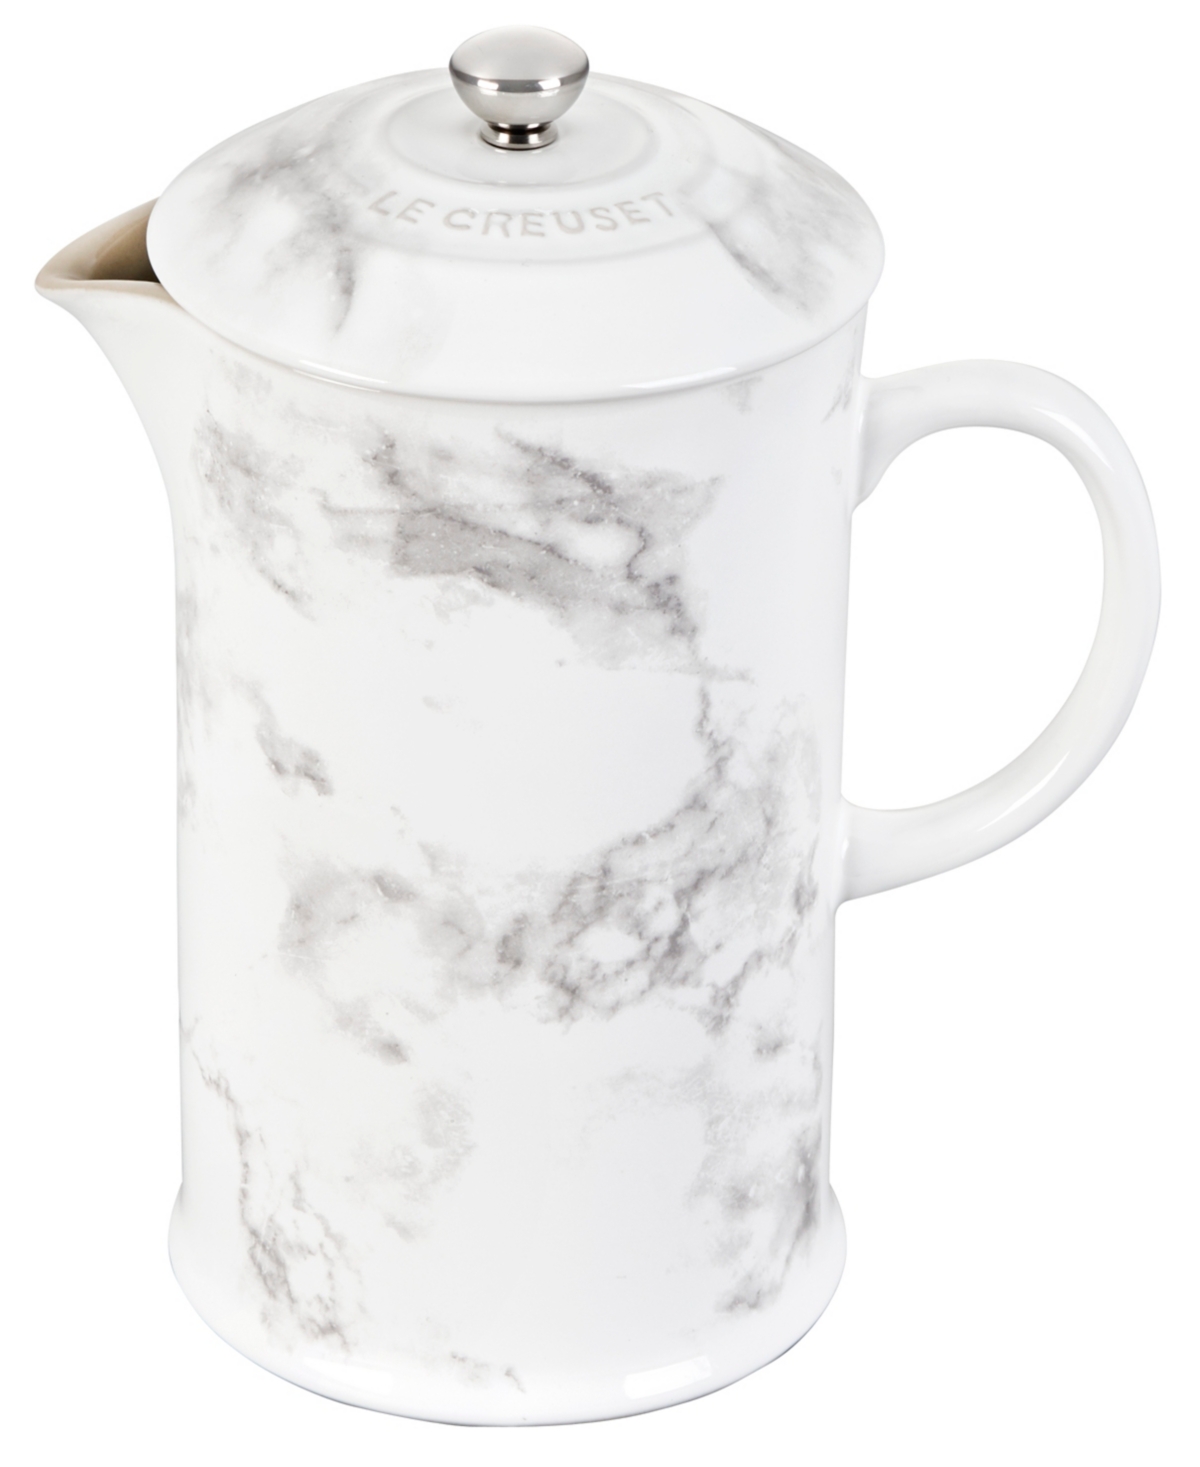 Le Creuset 34-oz. Stoneware French Press Coffee Maker In White